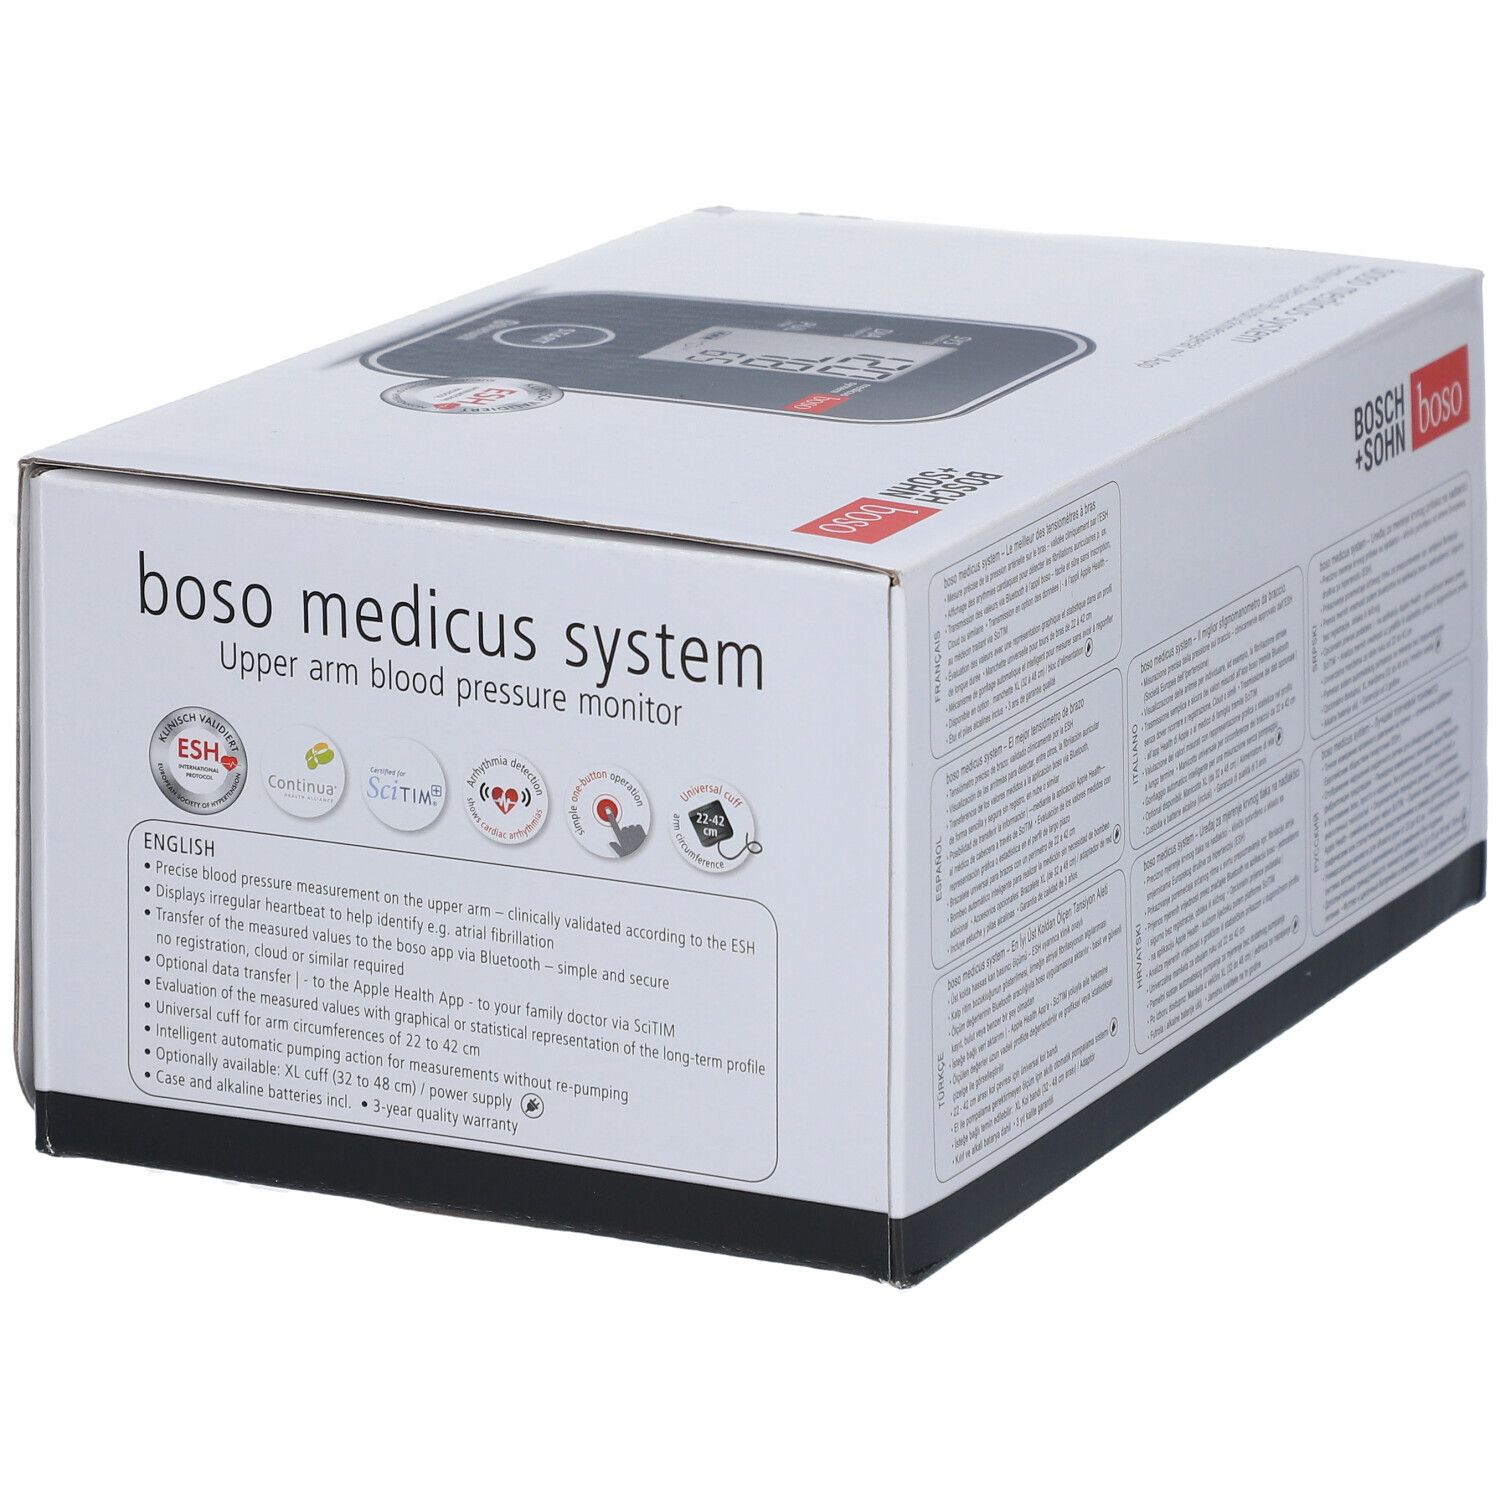 boso medicus system